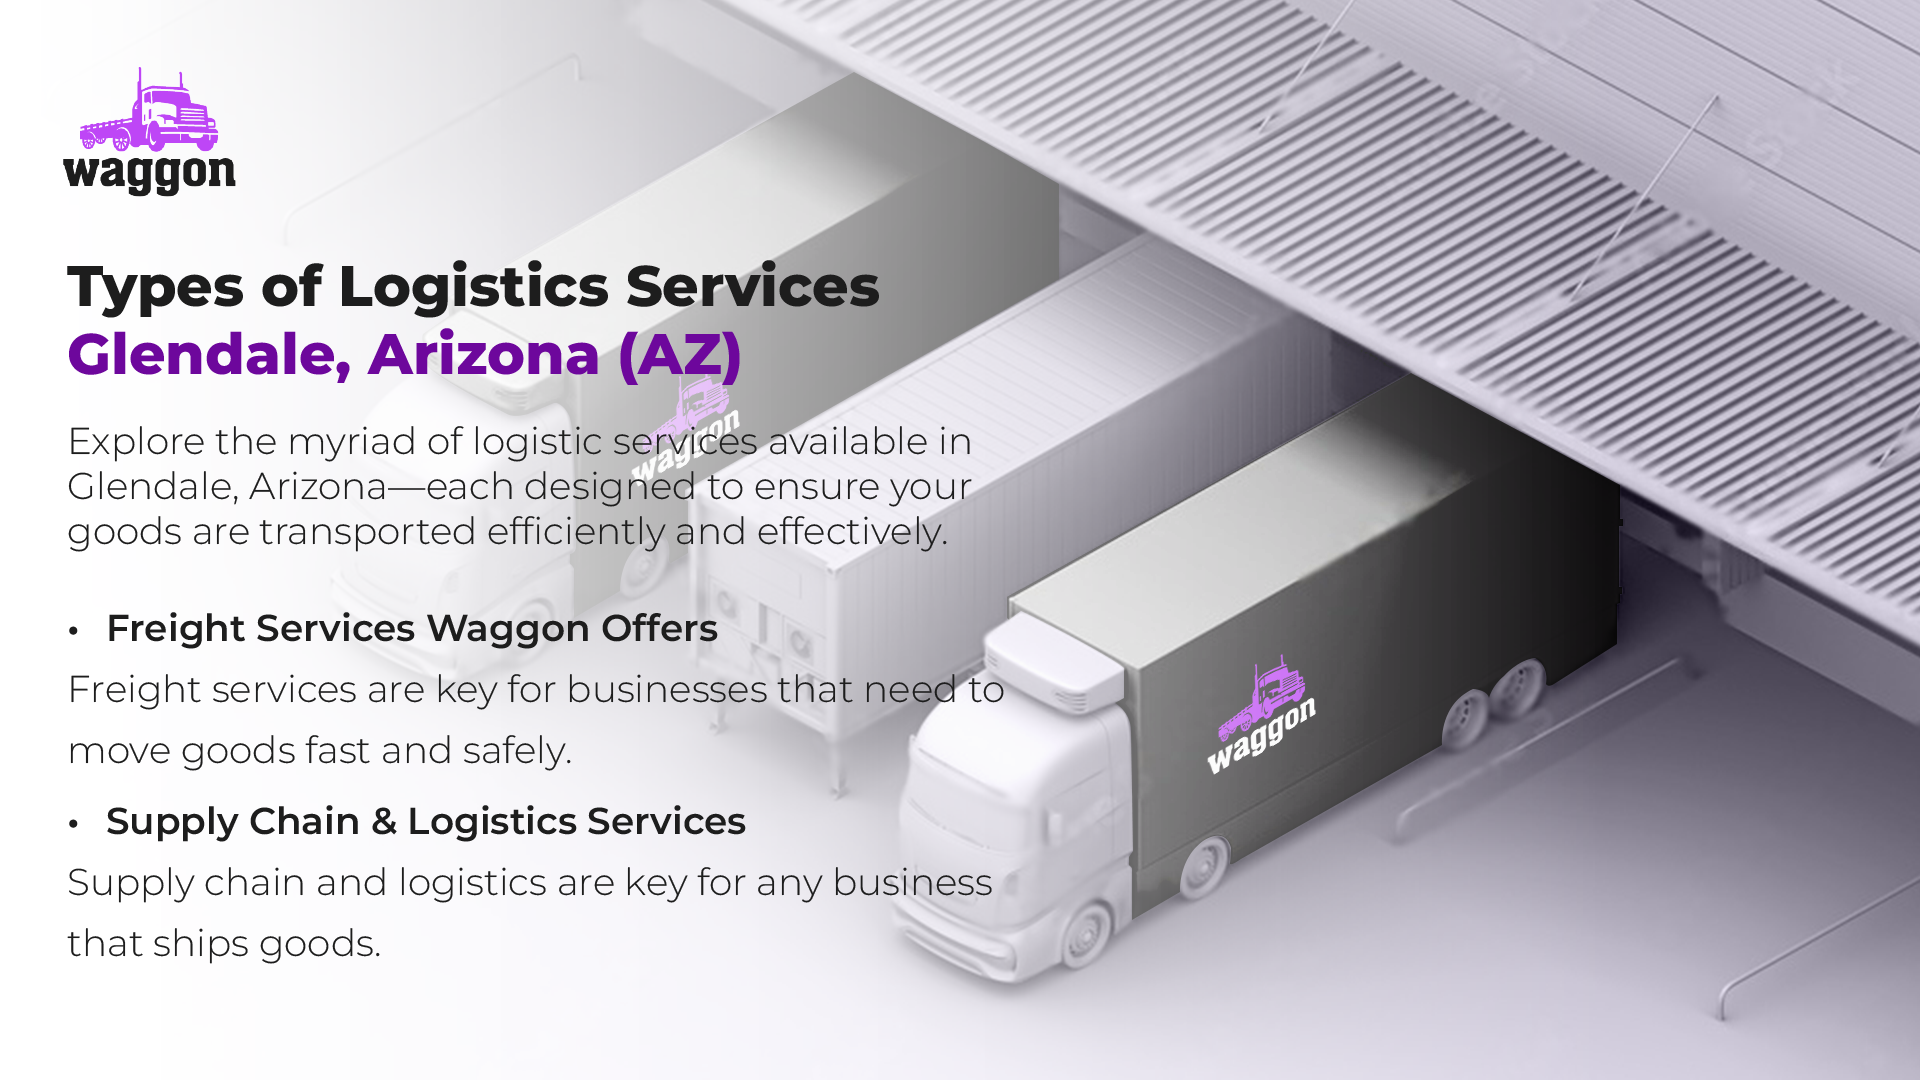 Types of Logistics Services in Glendale, Arizona (AZ)